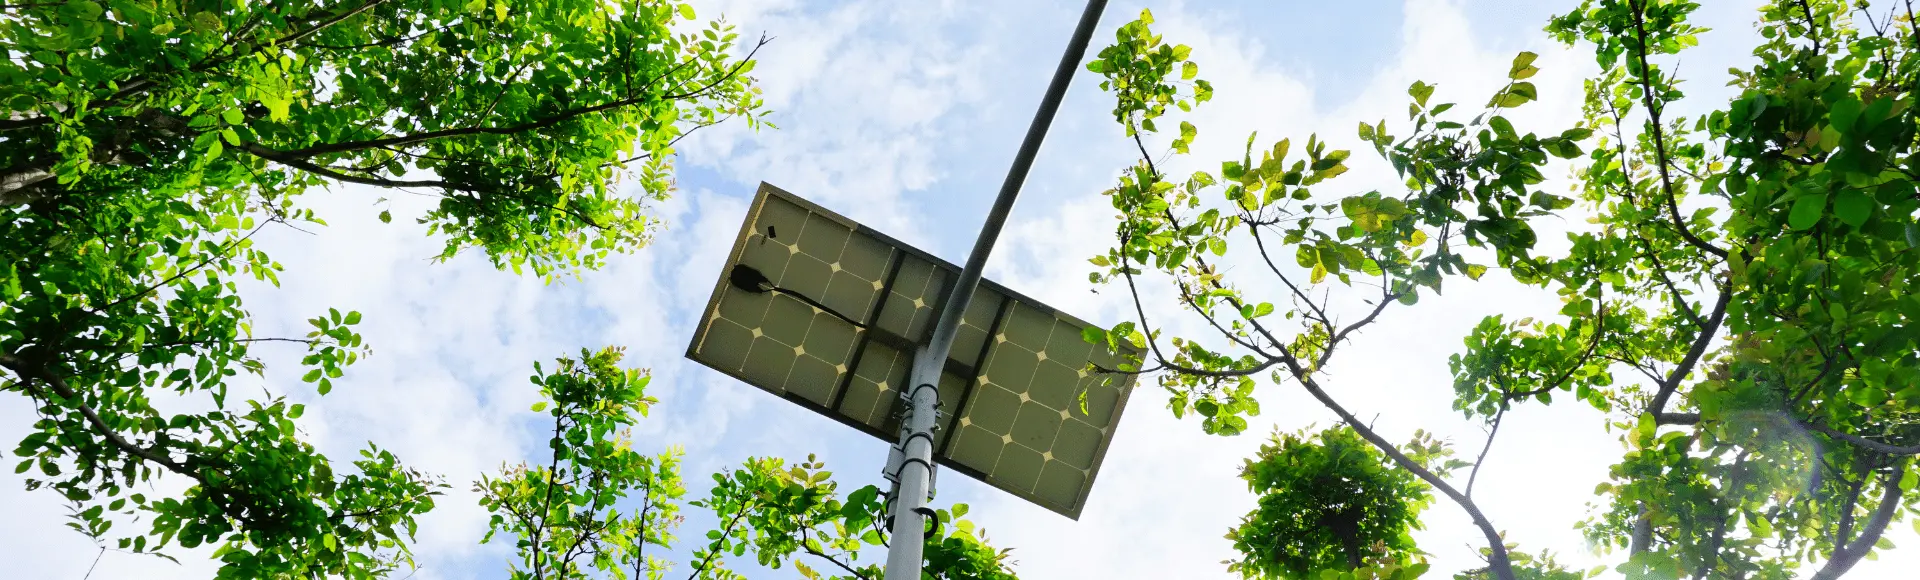 Smart Solar Street Light 